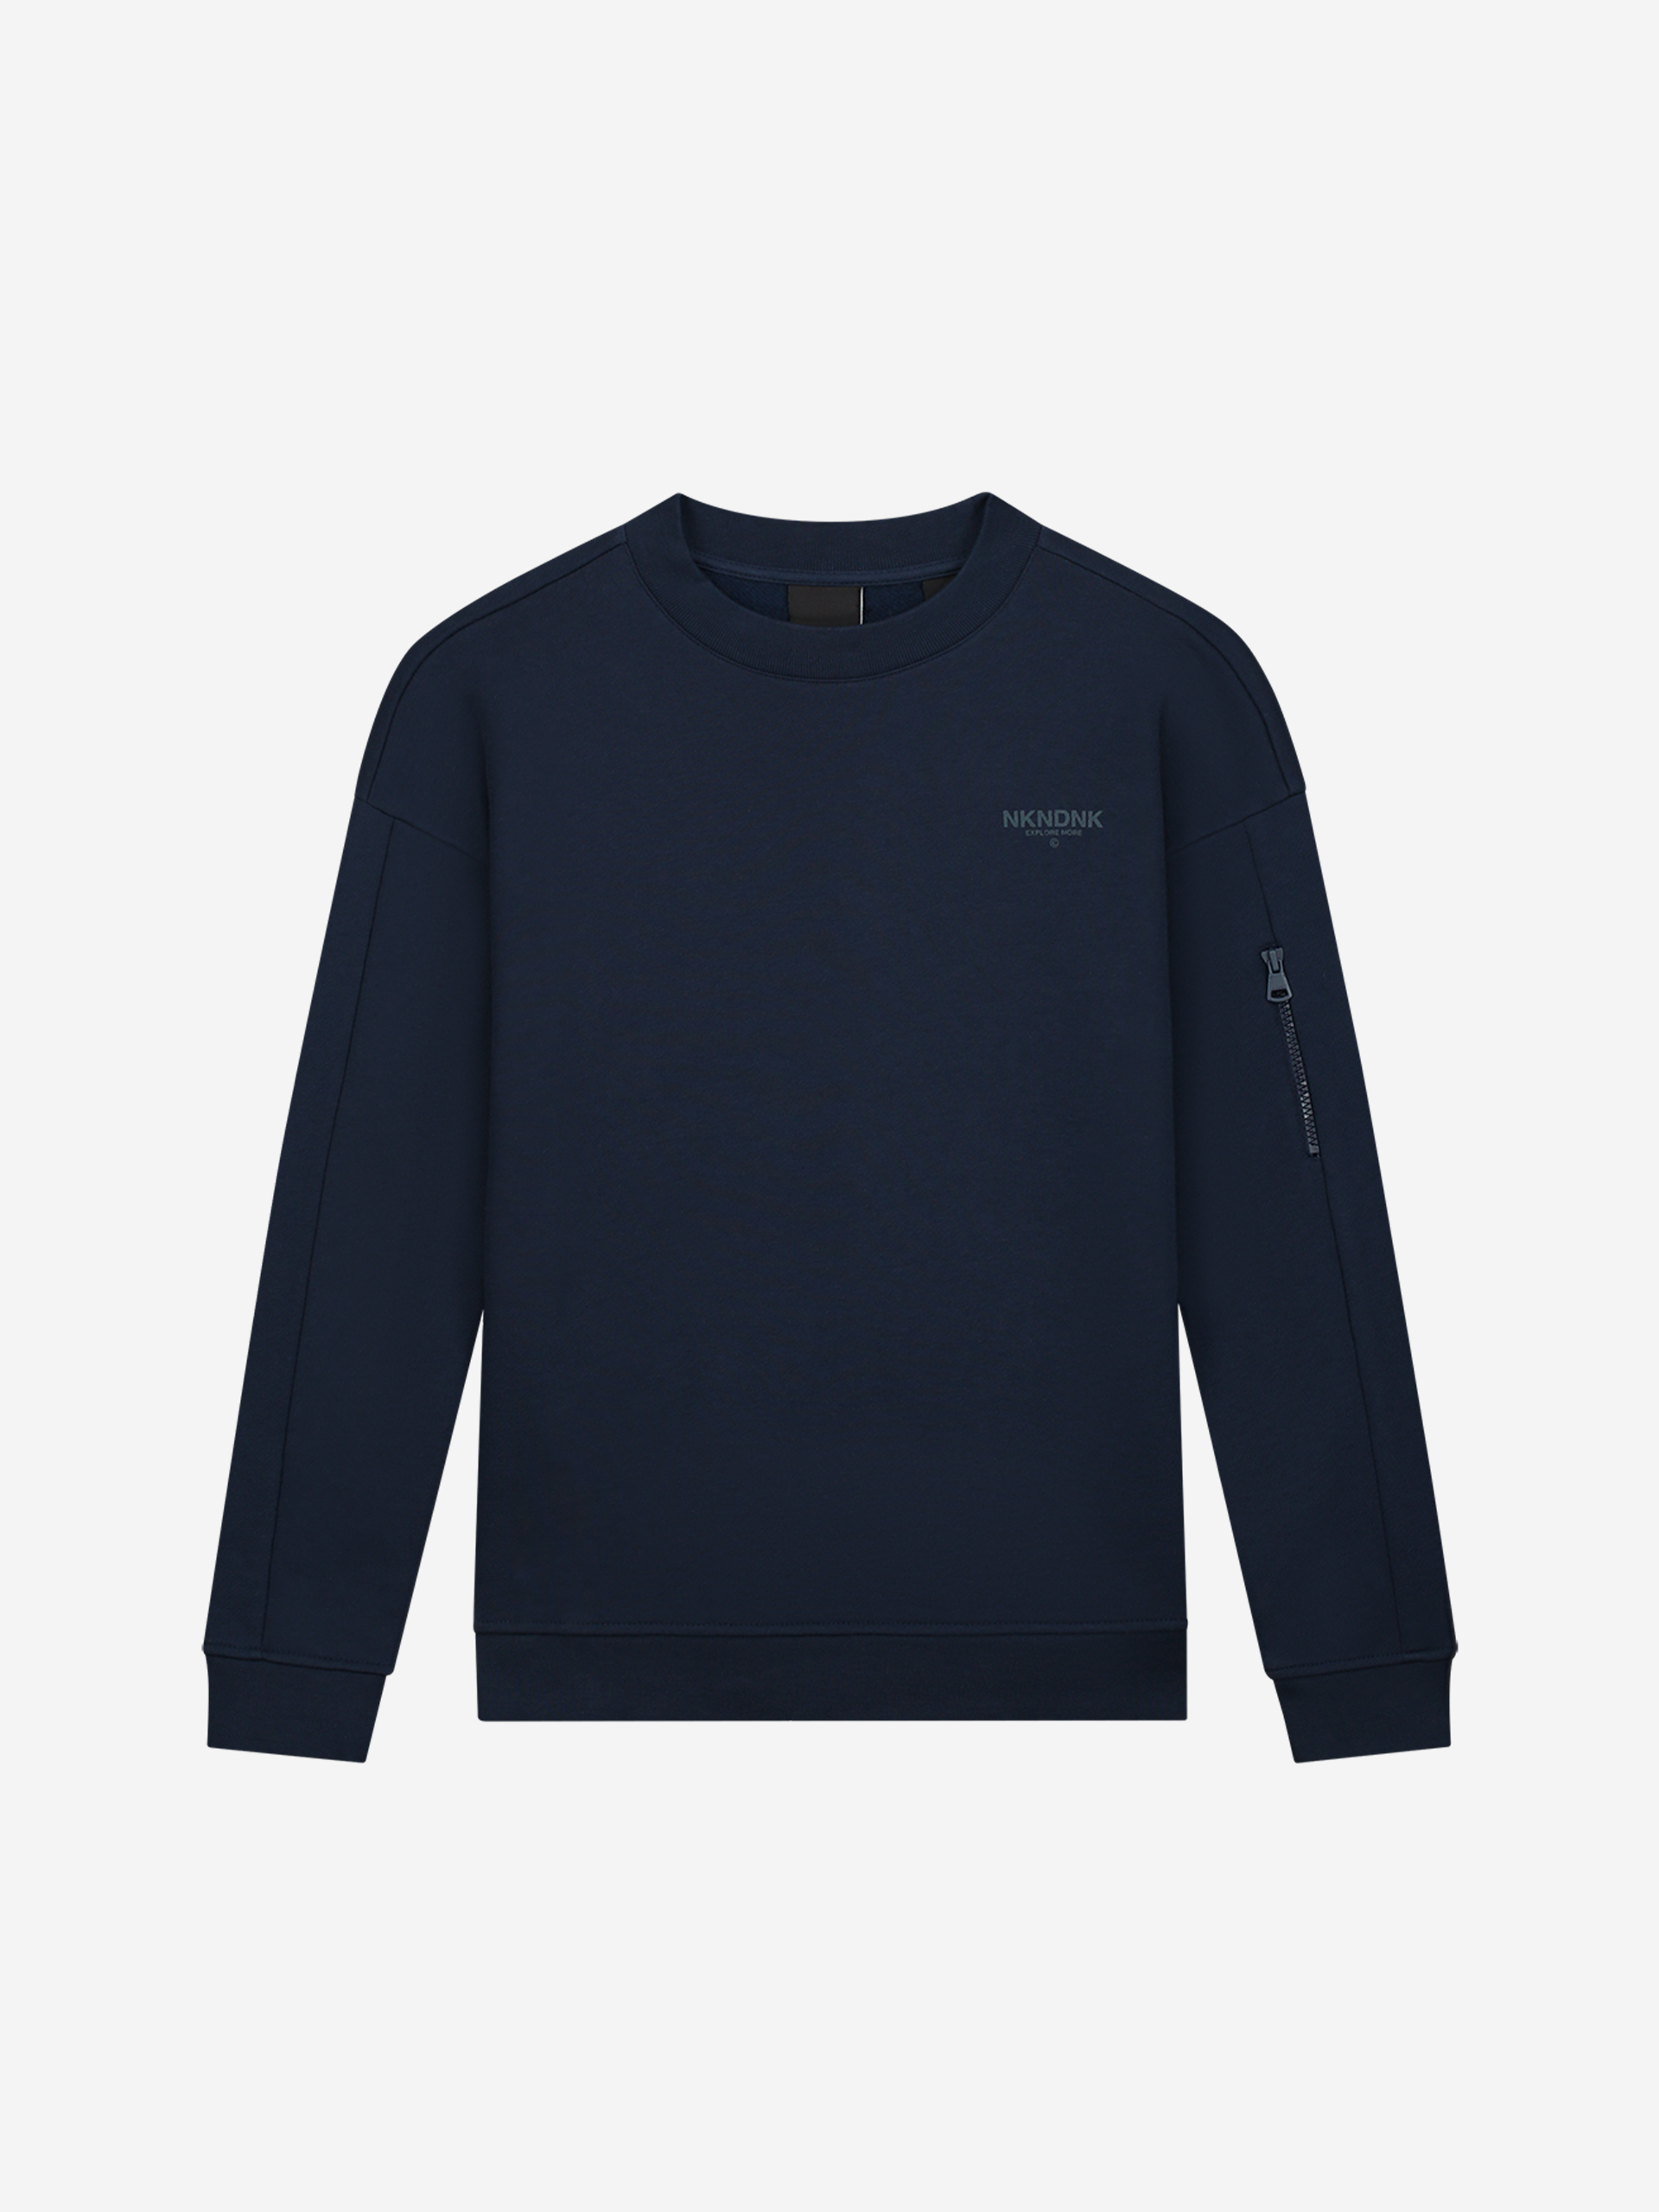 Sweatshirt with zipper pocket